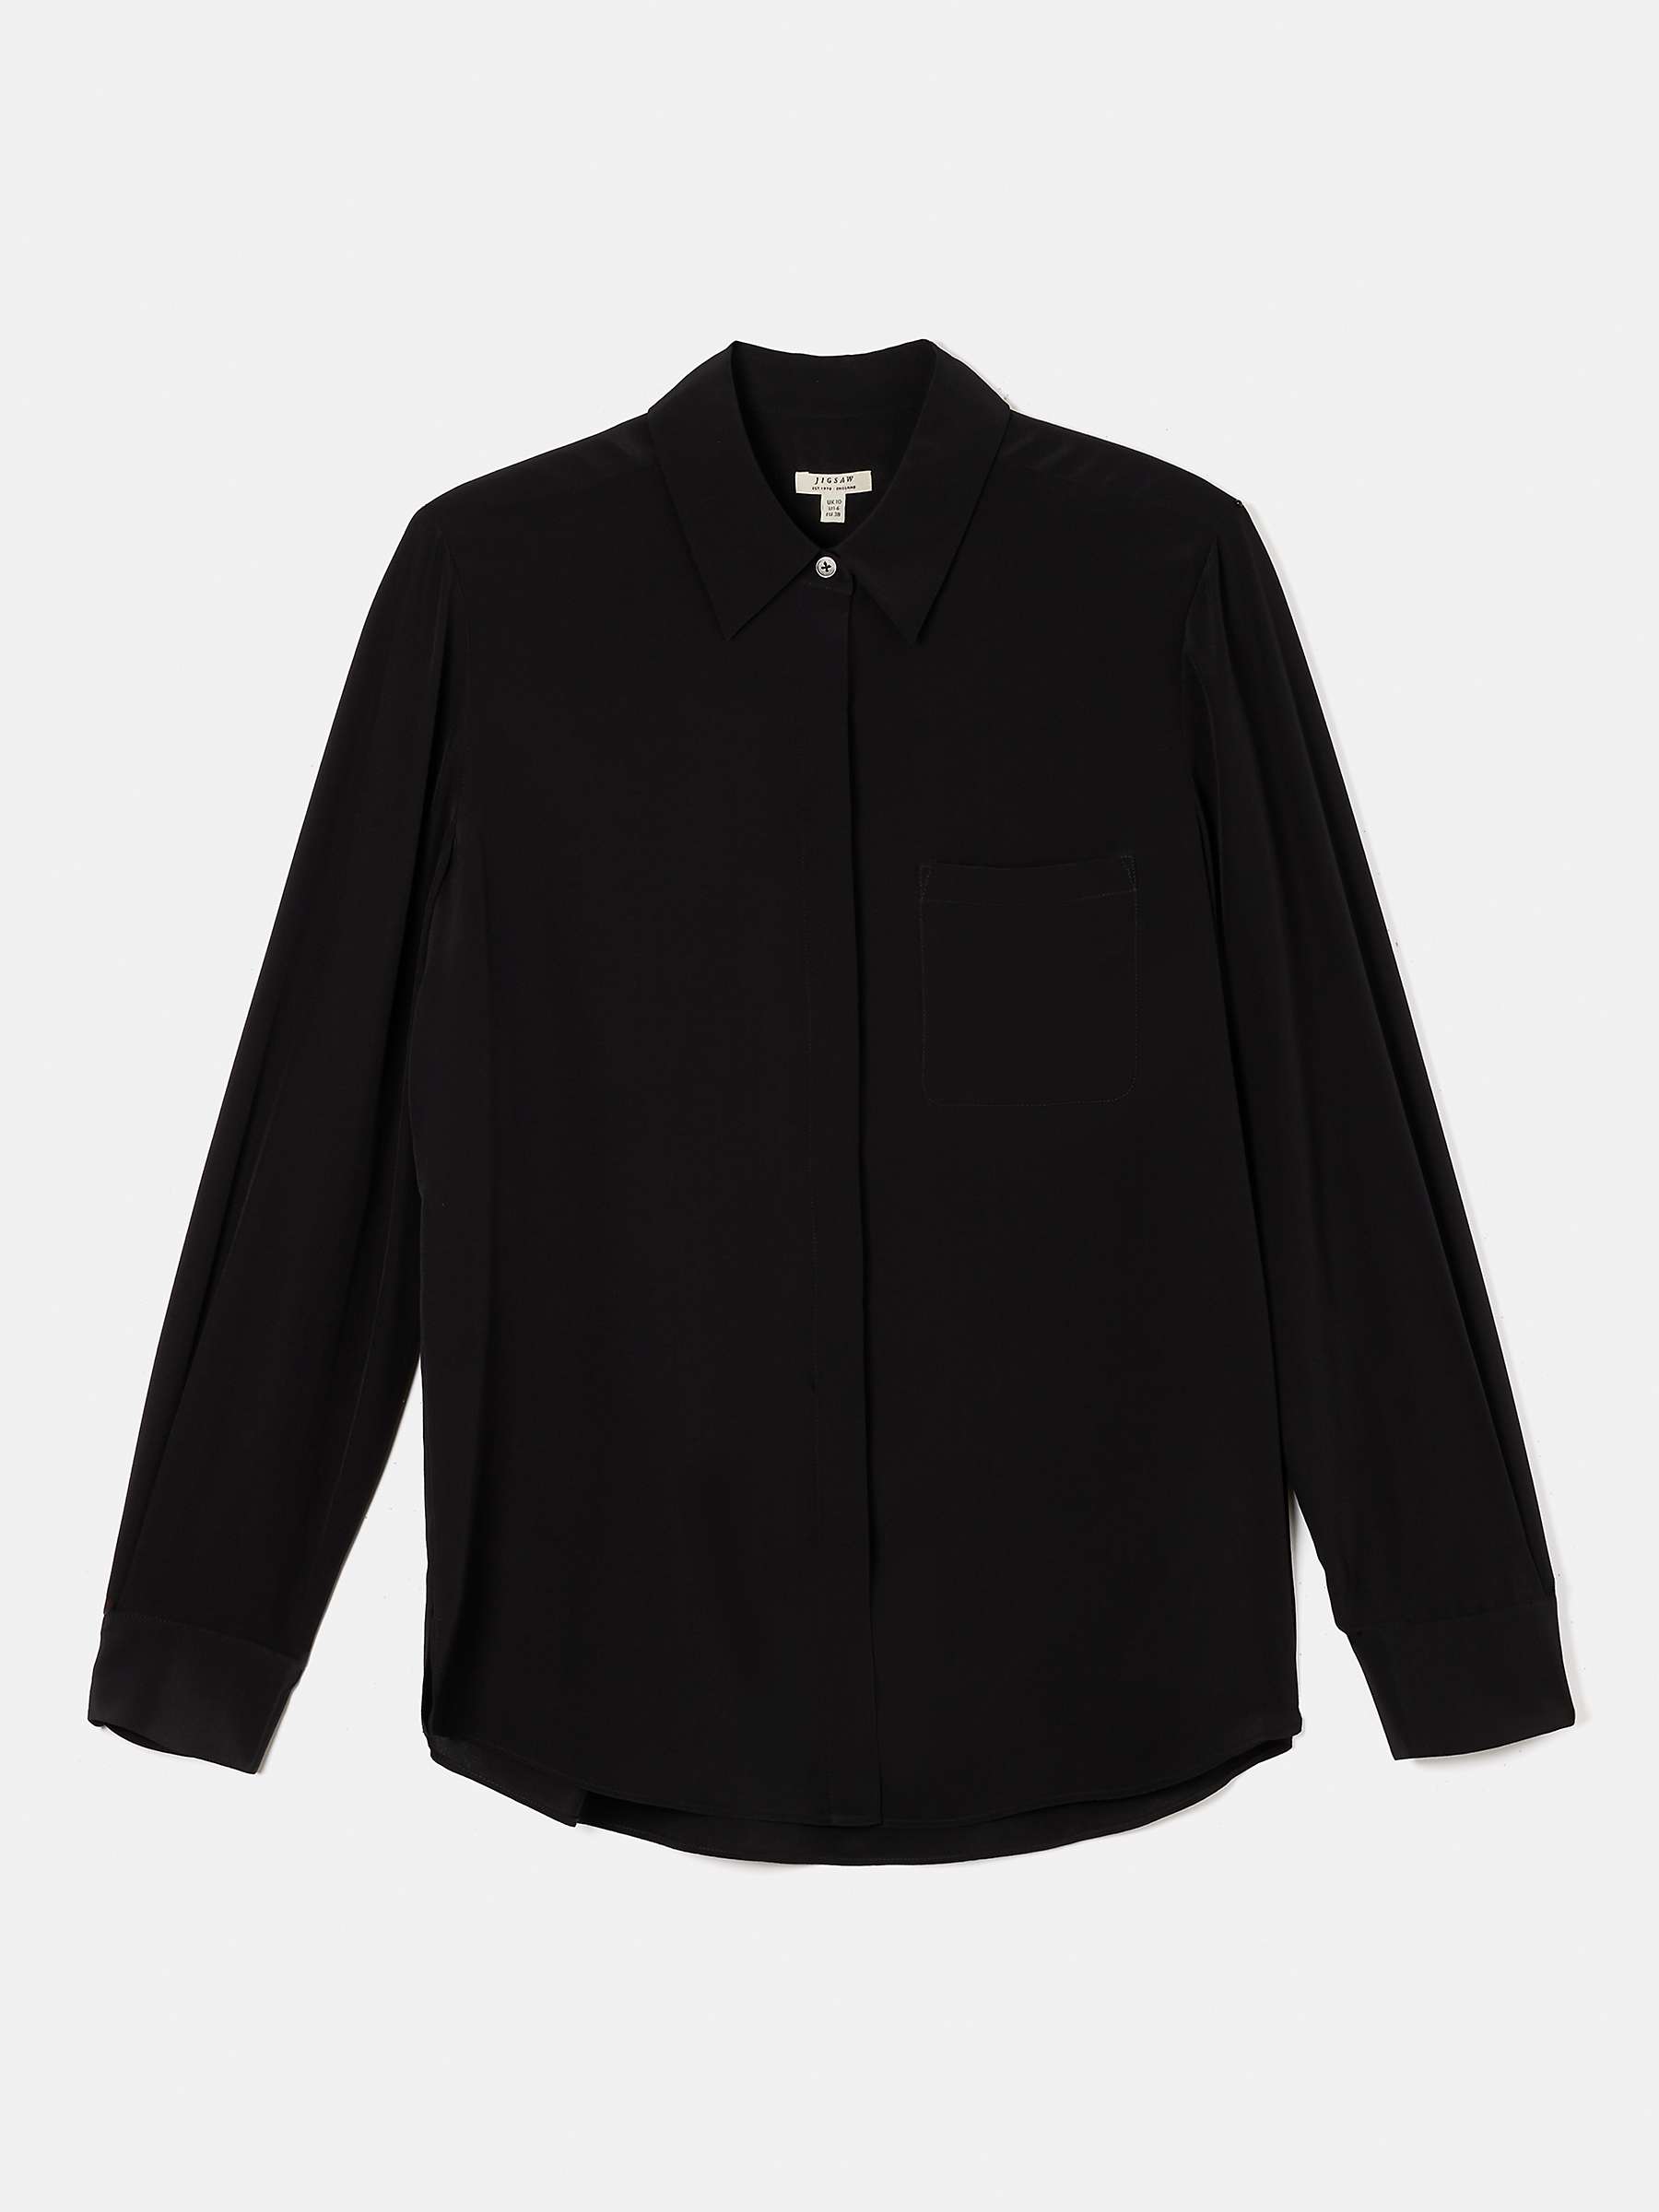 Jigsaw Silk Shirt, Black at John Lewis & Partners